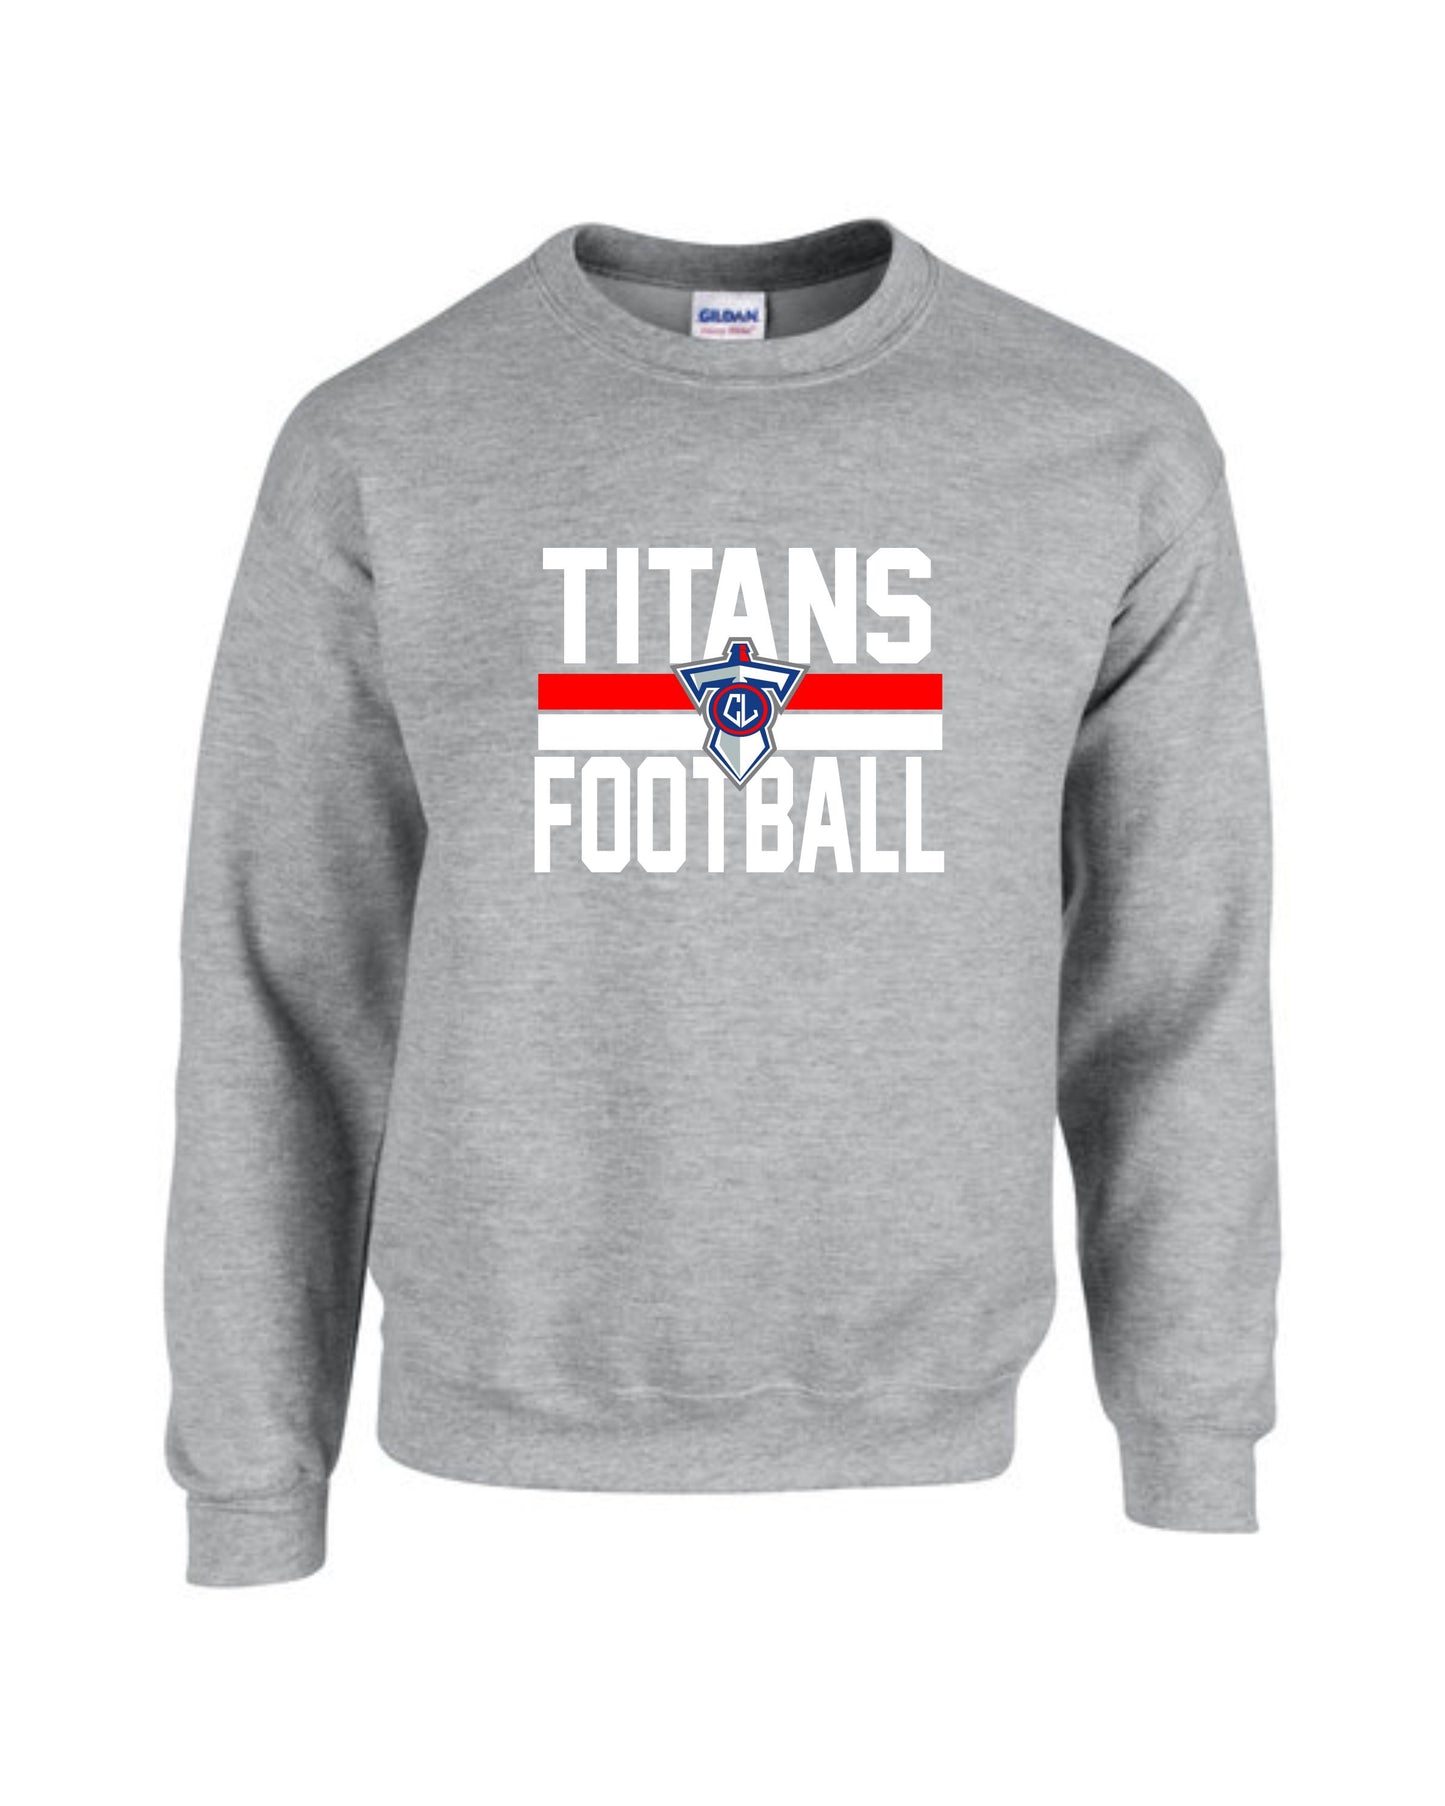 Titans Football Sword - Outerwear